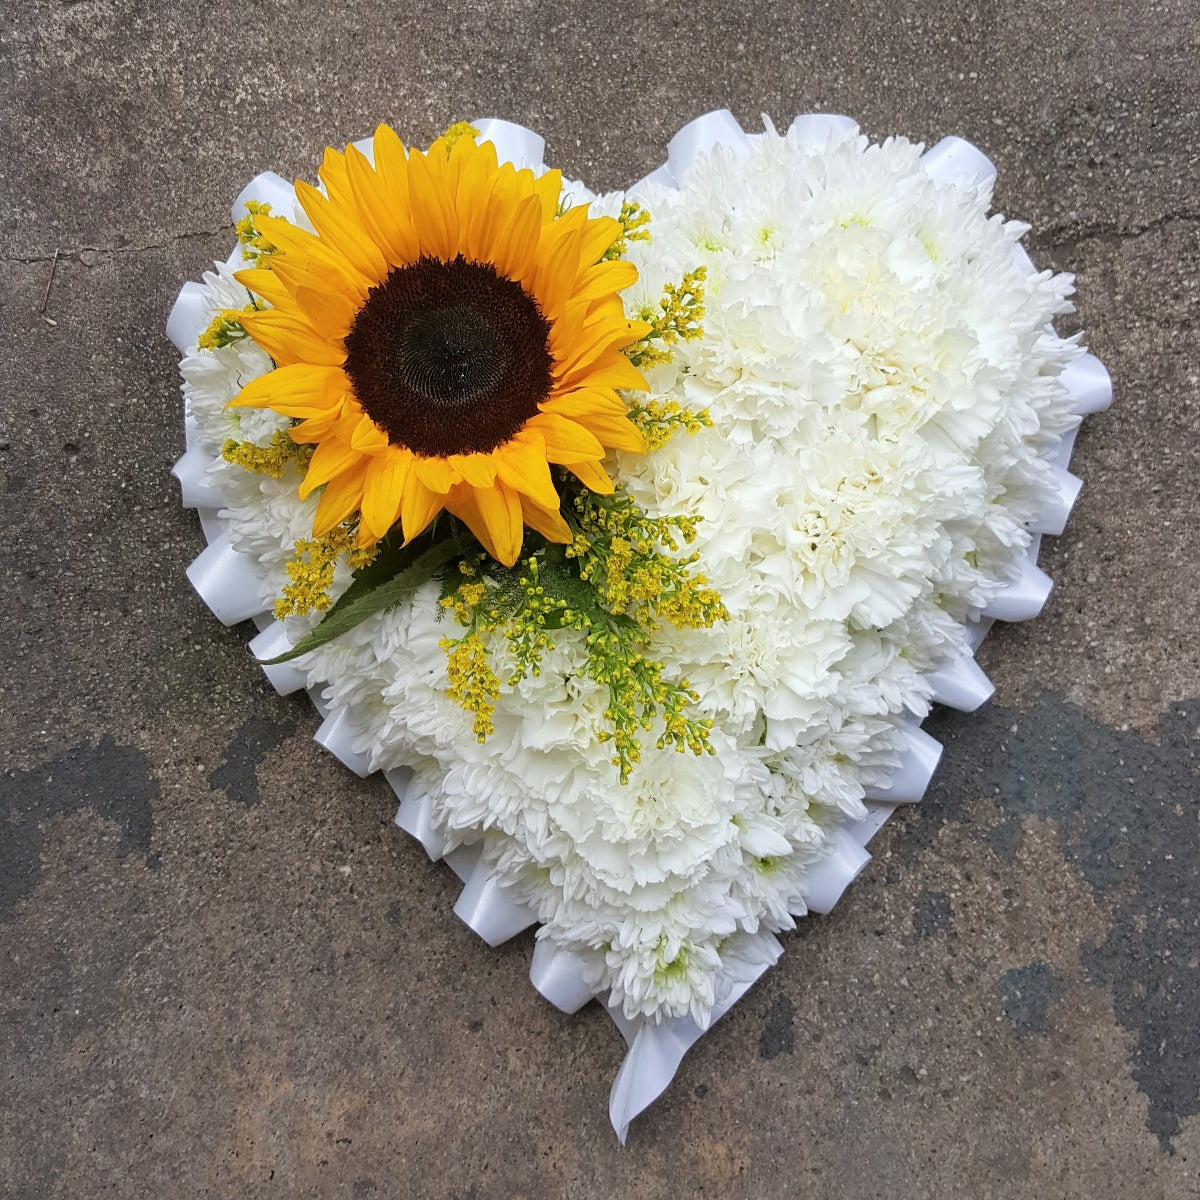 Sunny Daze Heart Funeral Tribute